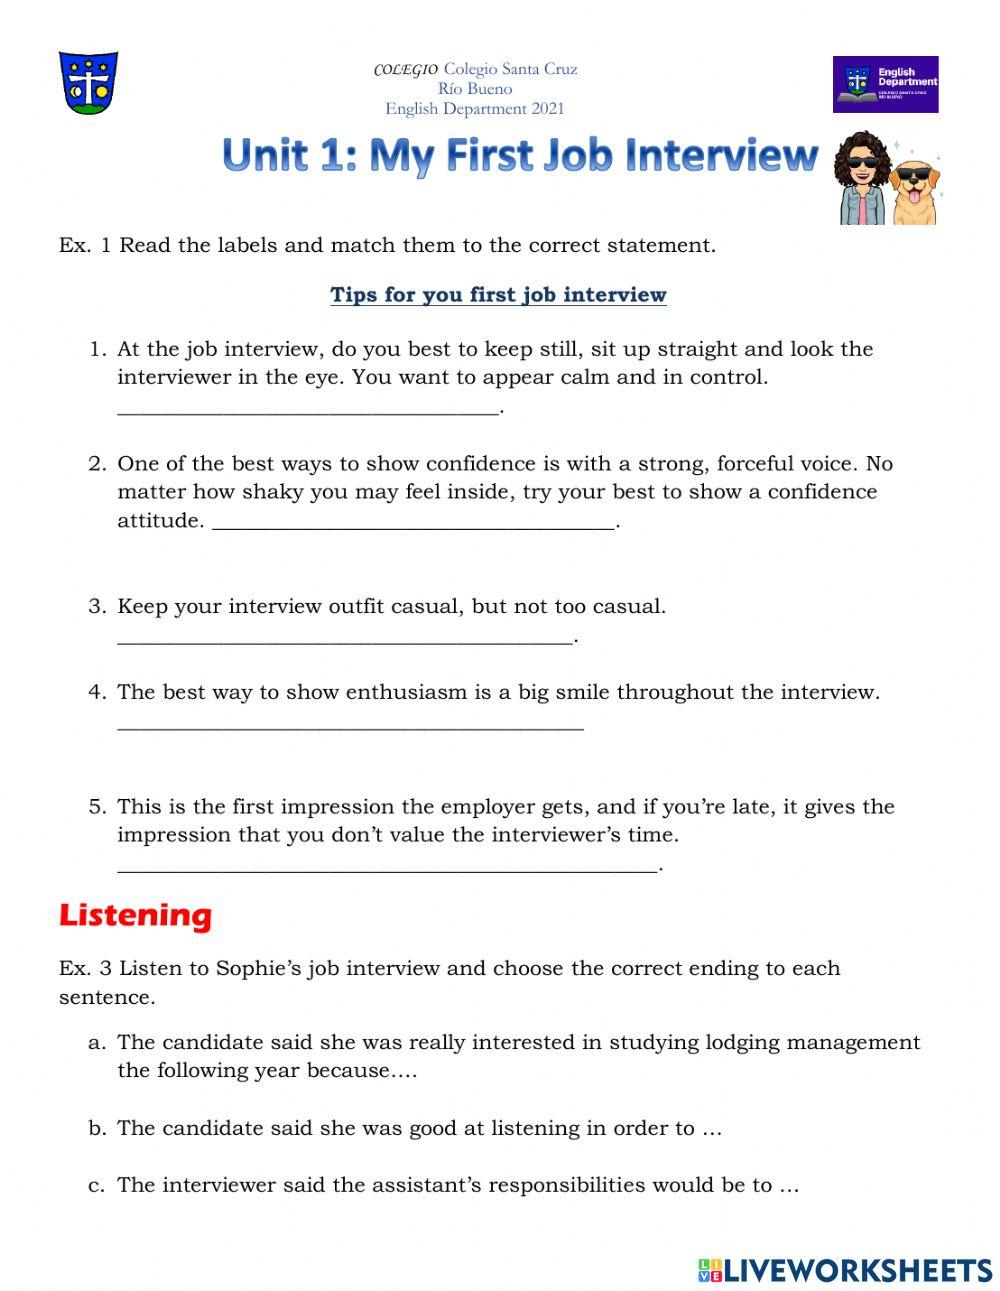 My fisrts job interview